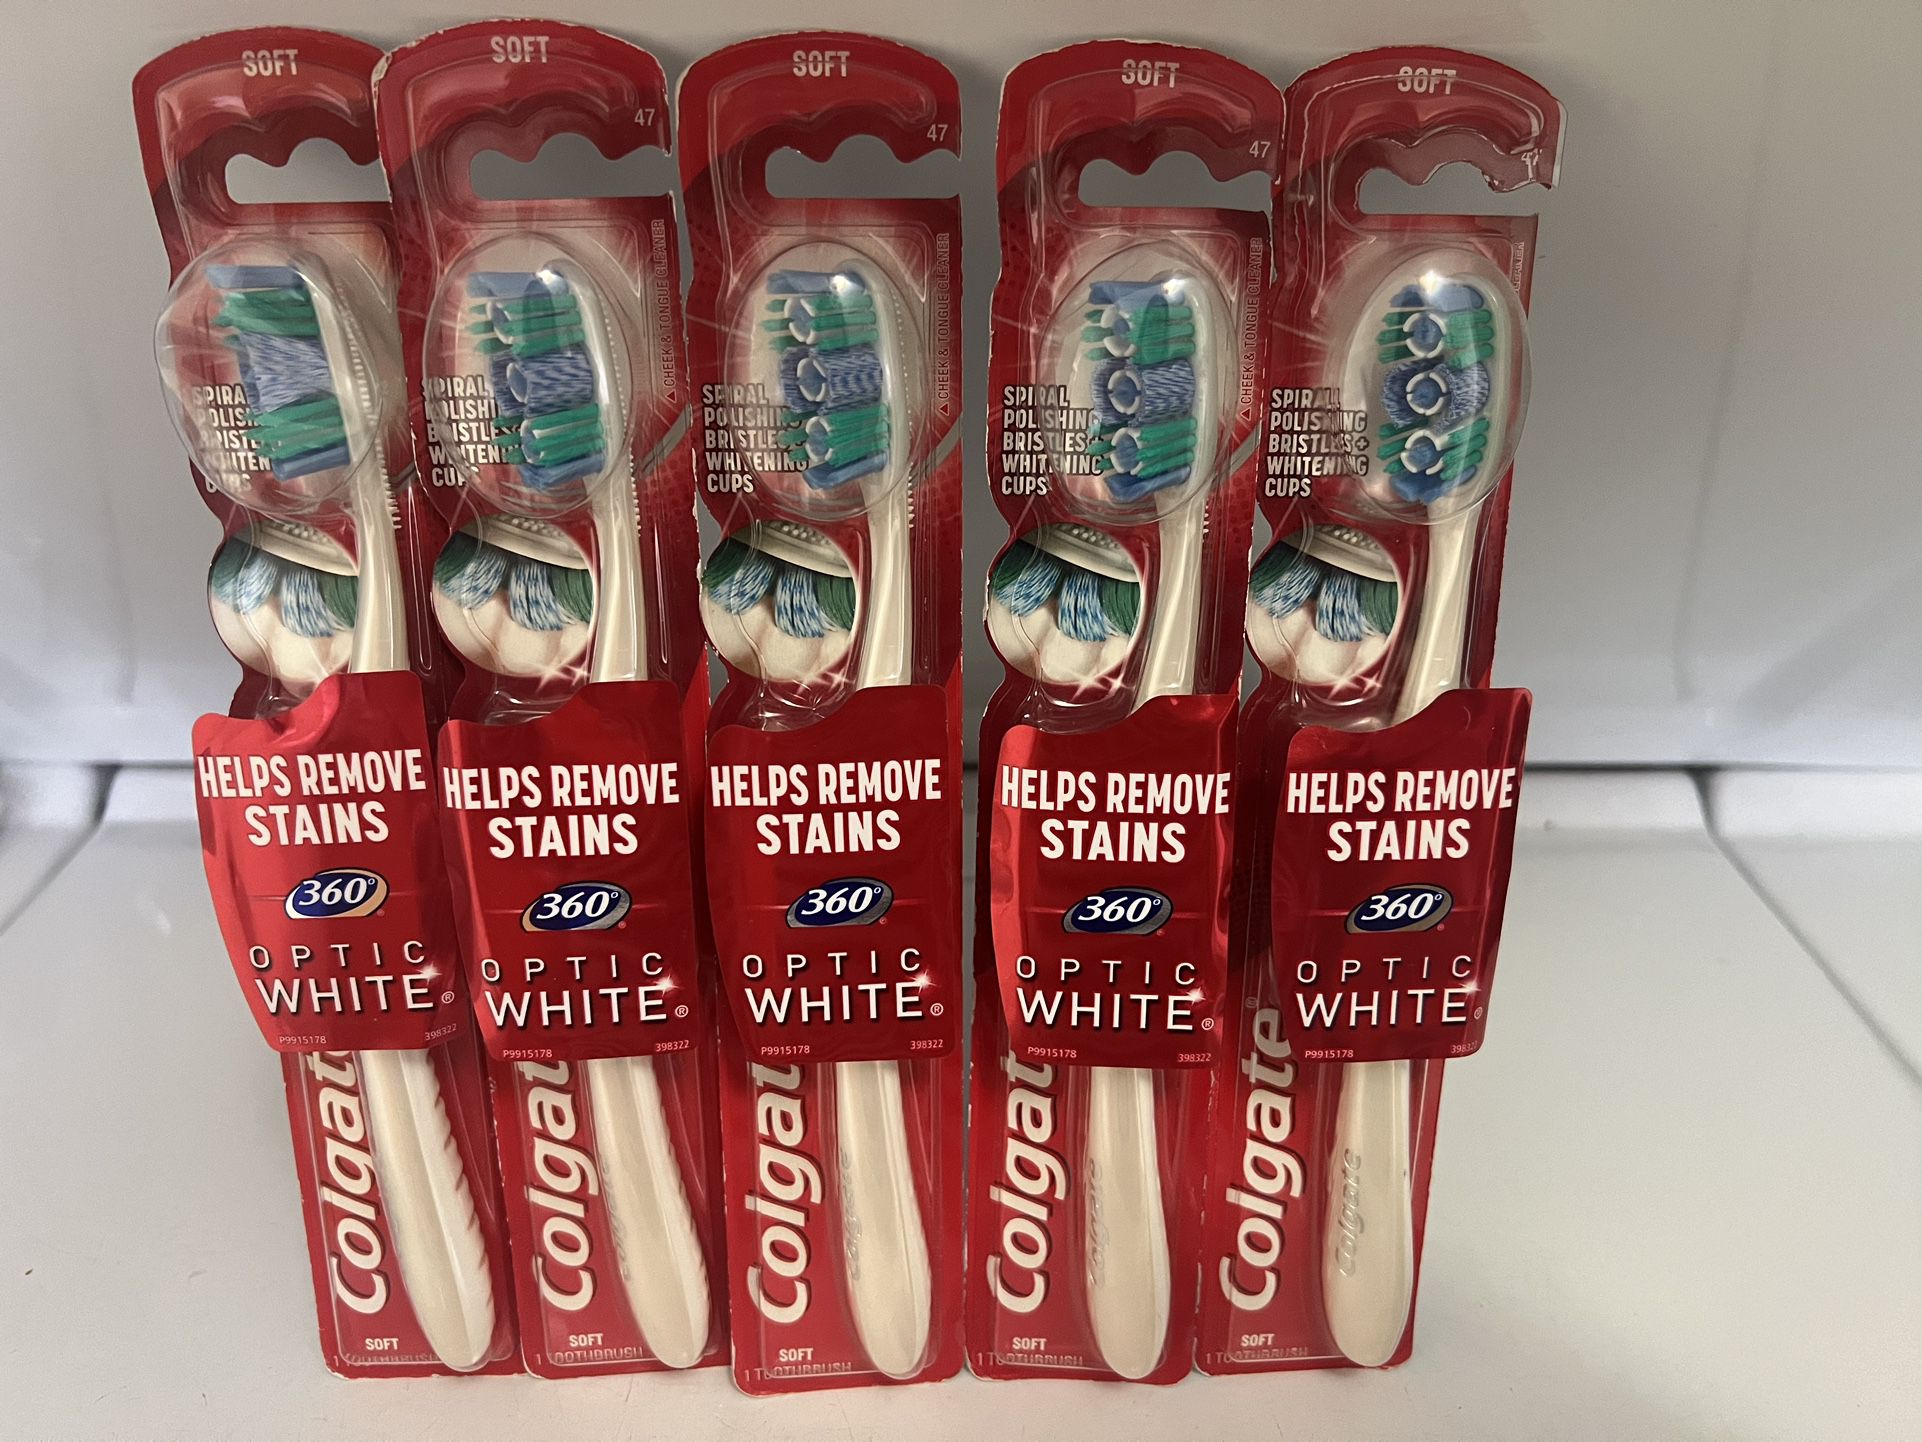 Colgate 360 Optic White toothbrush all 5 x $12